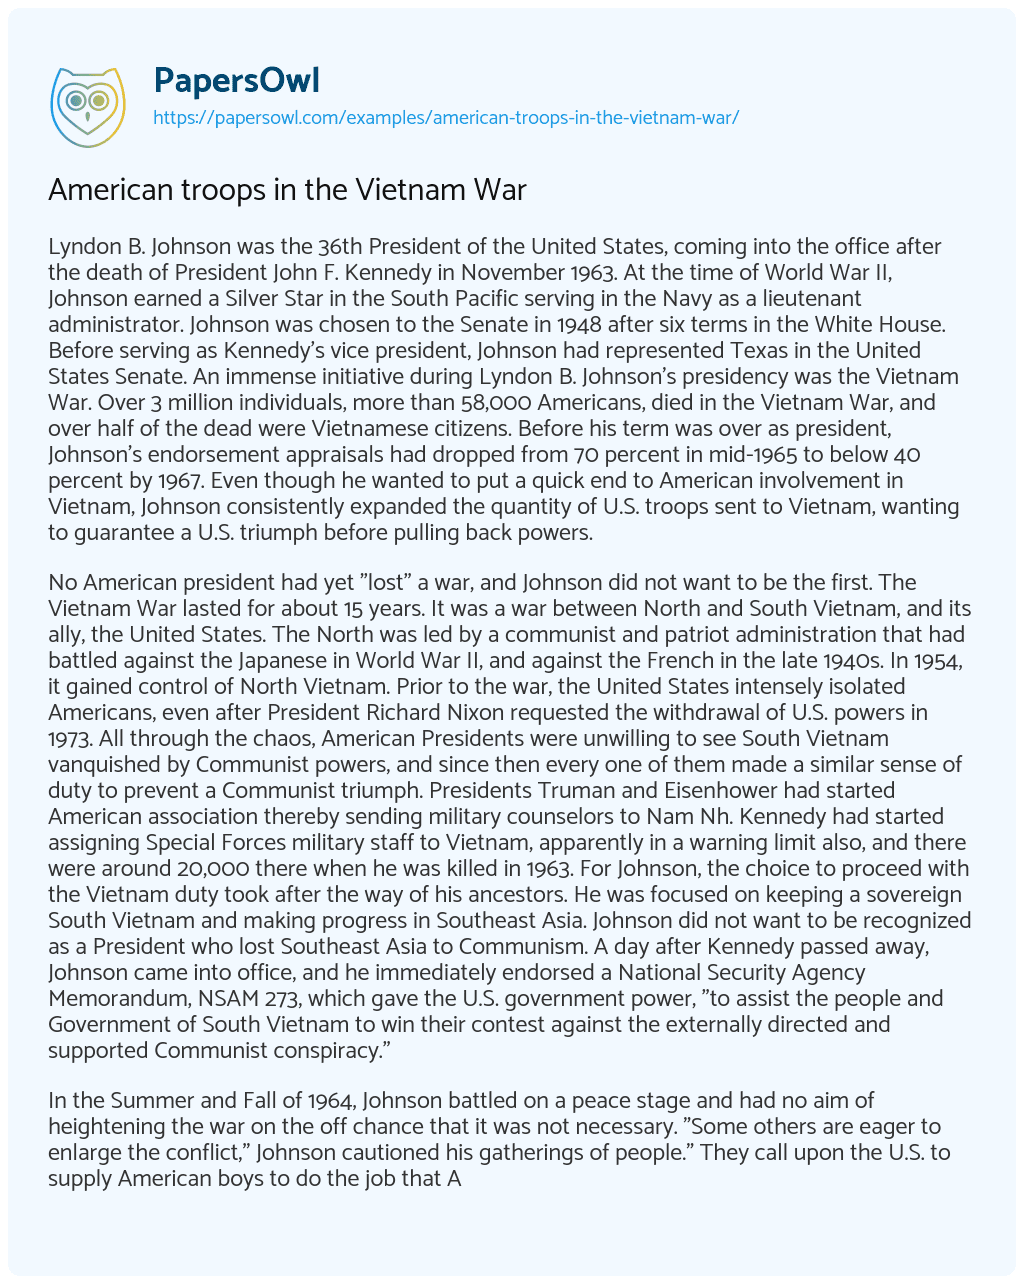 Essay on American Troops in the Vietnam War